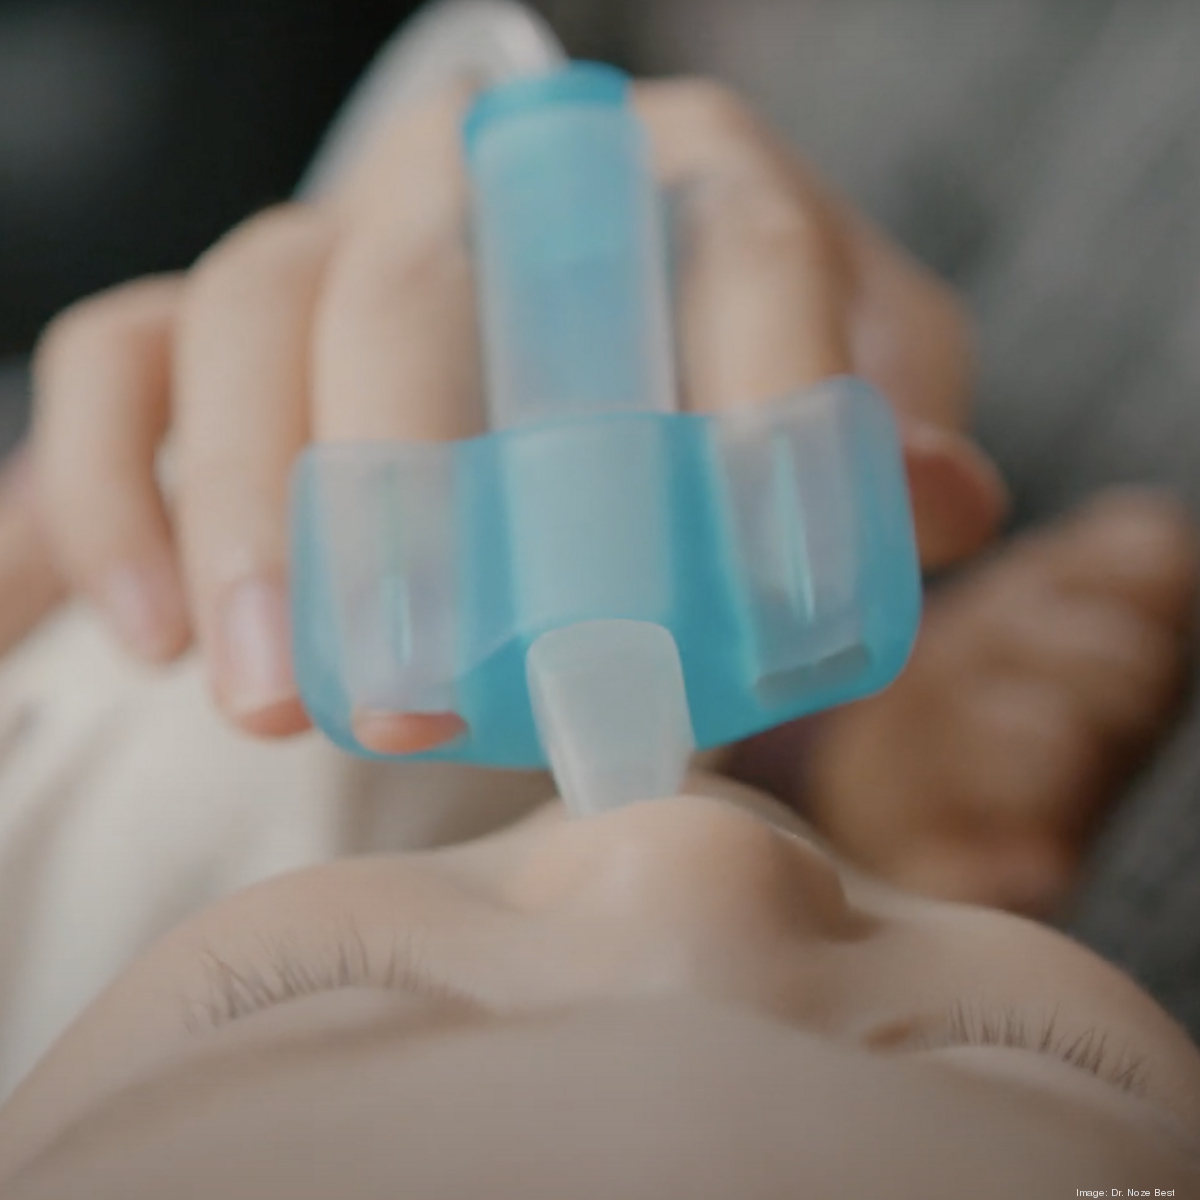 Atlanta Inno - Atlanta pediatrician launches NozeBot product to alleviate  congestion in babies